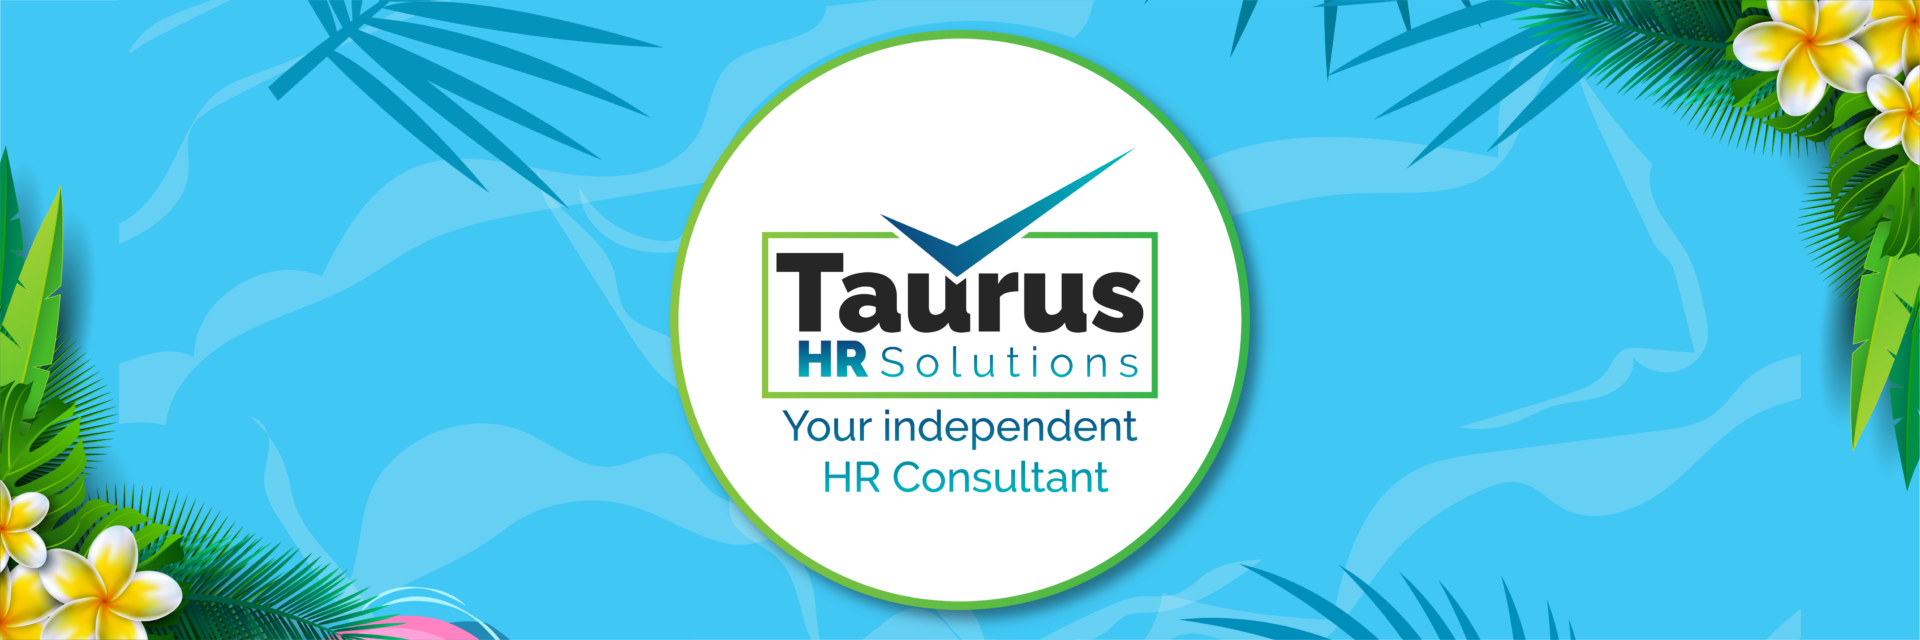 Taurus HR Solutions Ltd